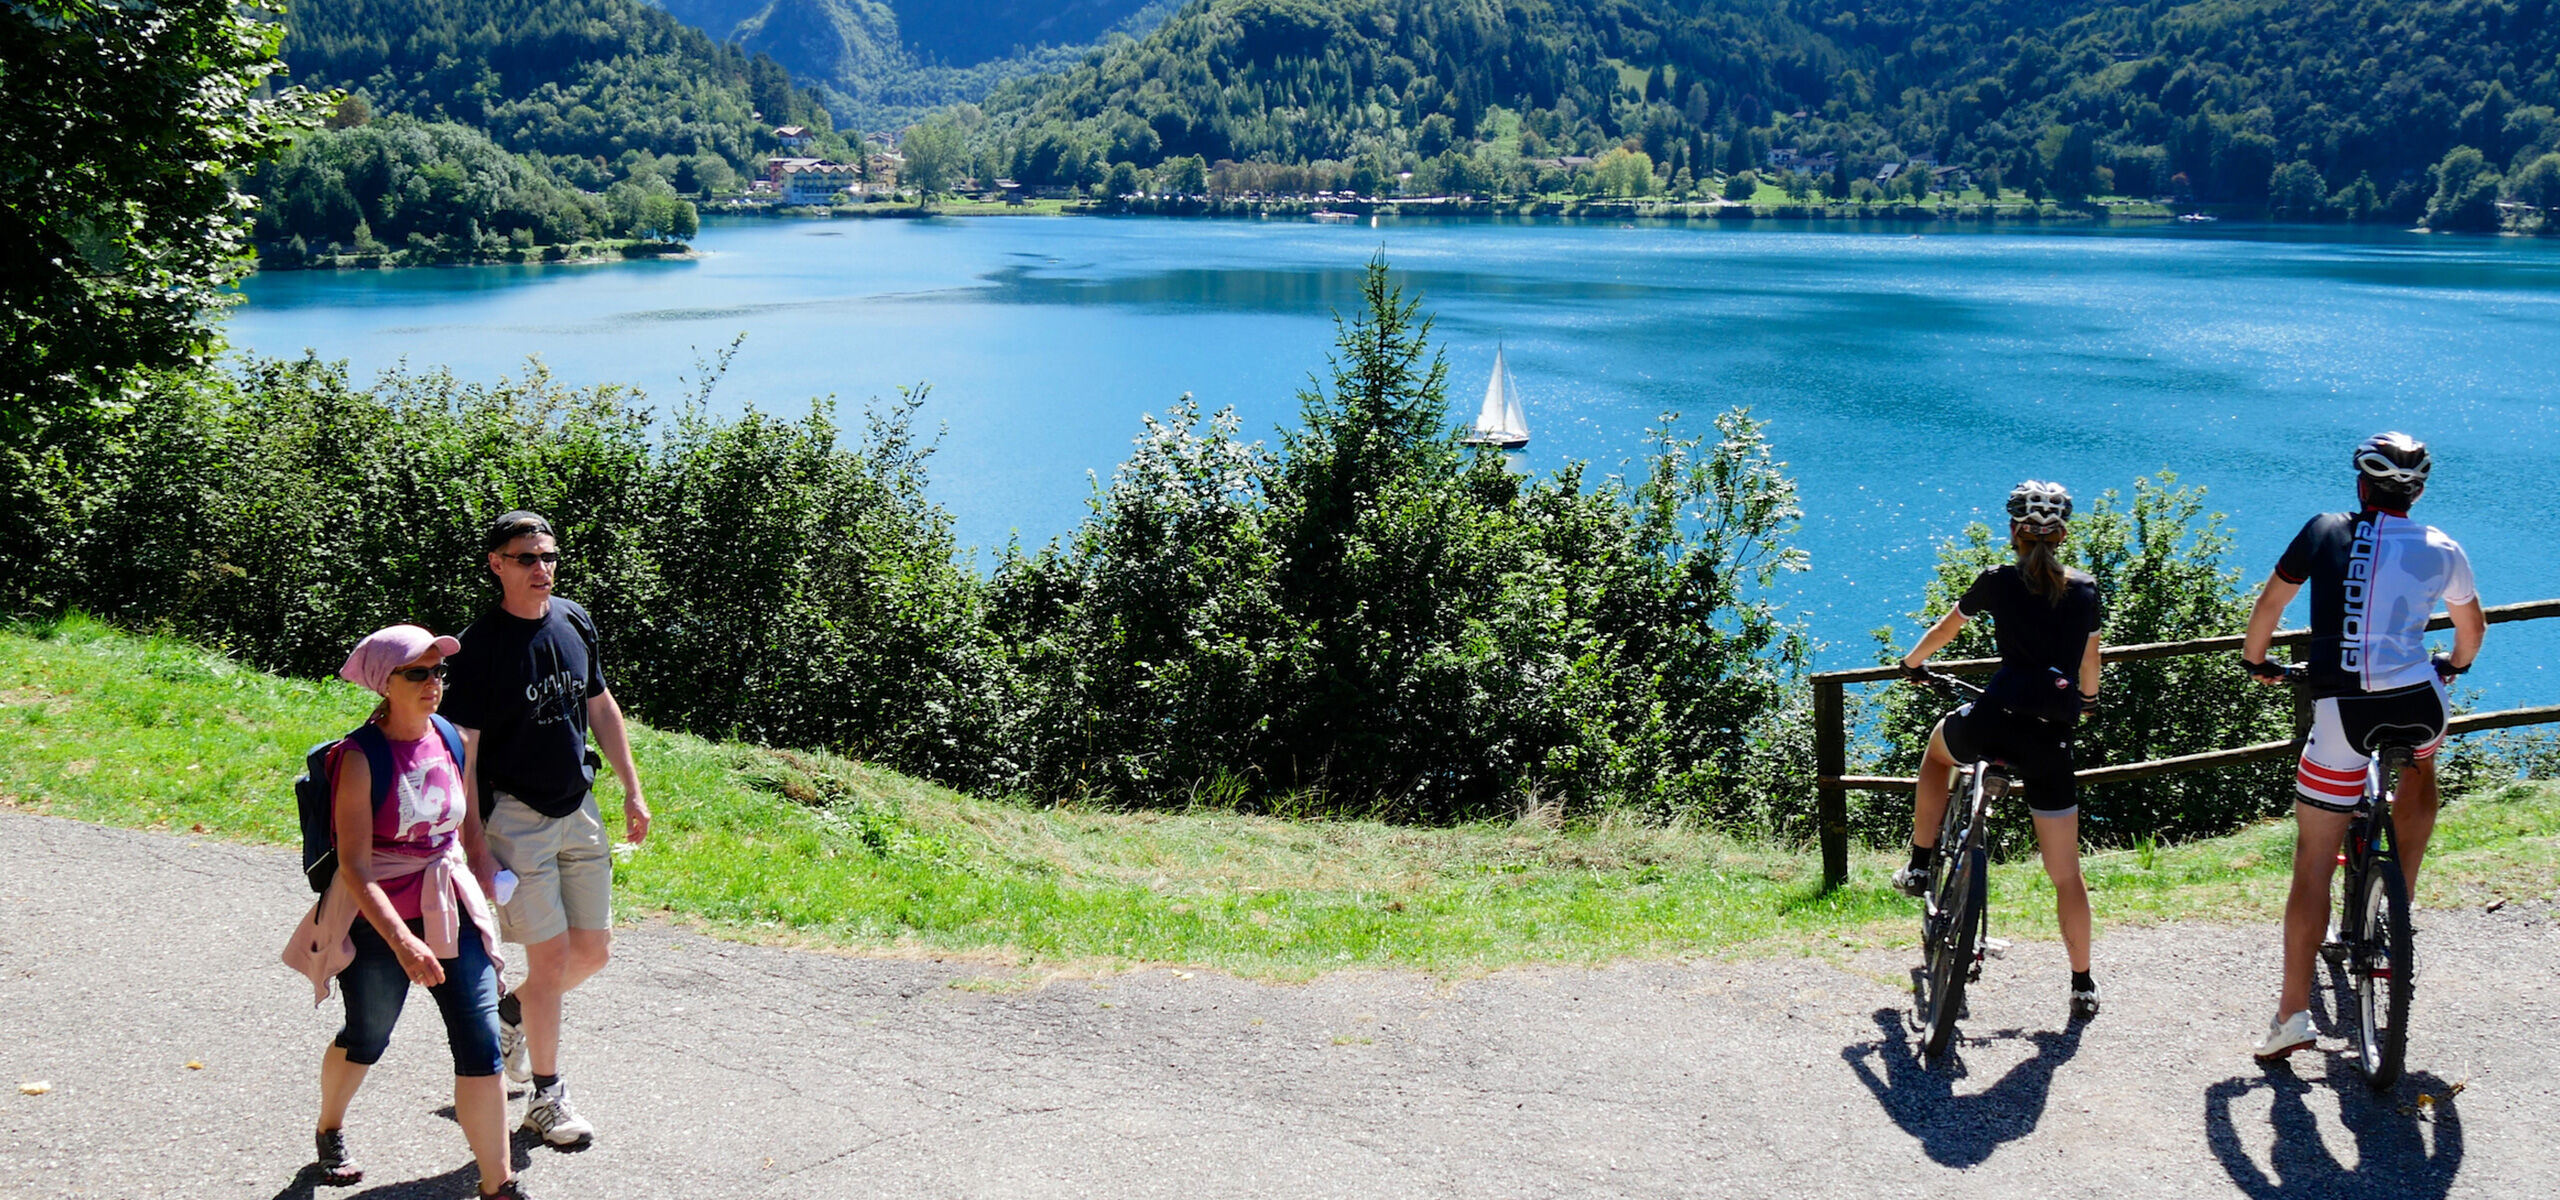 Walks on Lake Ledro: Hiking paths for everyone